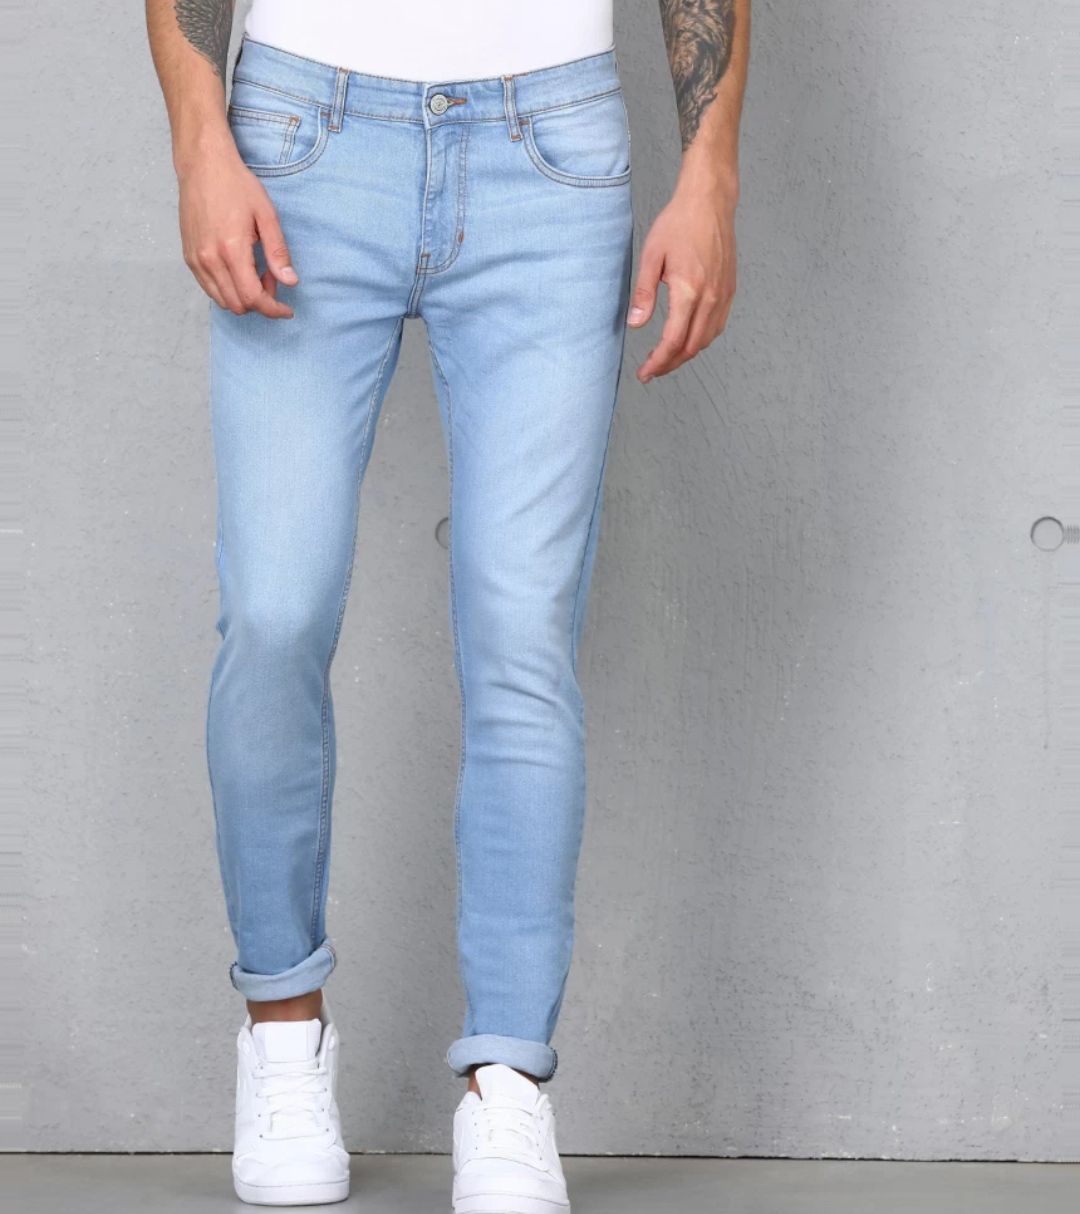 Denim Slim Fit Men Light Blue Ripped Jeans at Rs 650/piece in Bengaluru |  ID: 20594799497